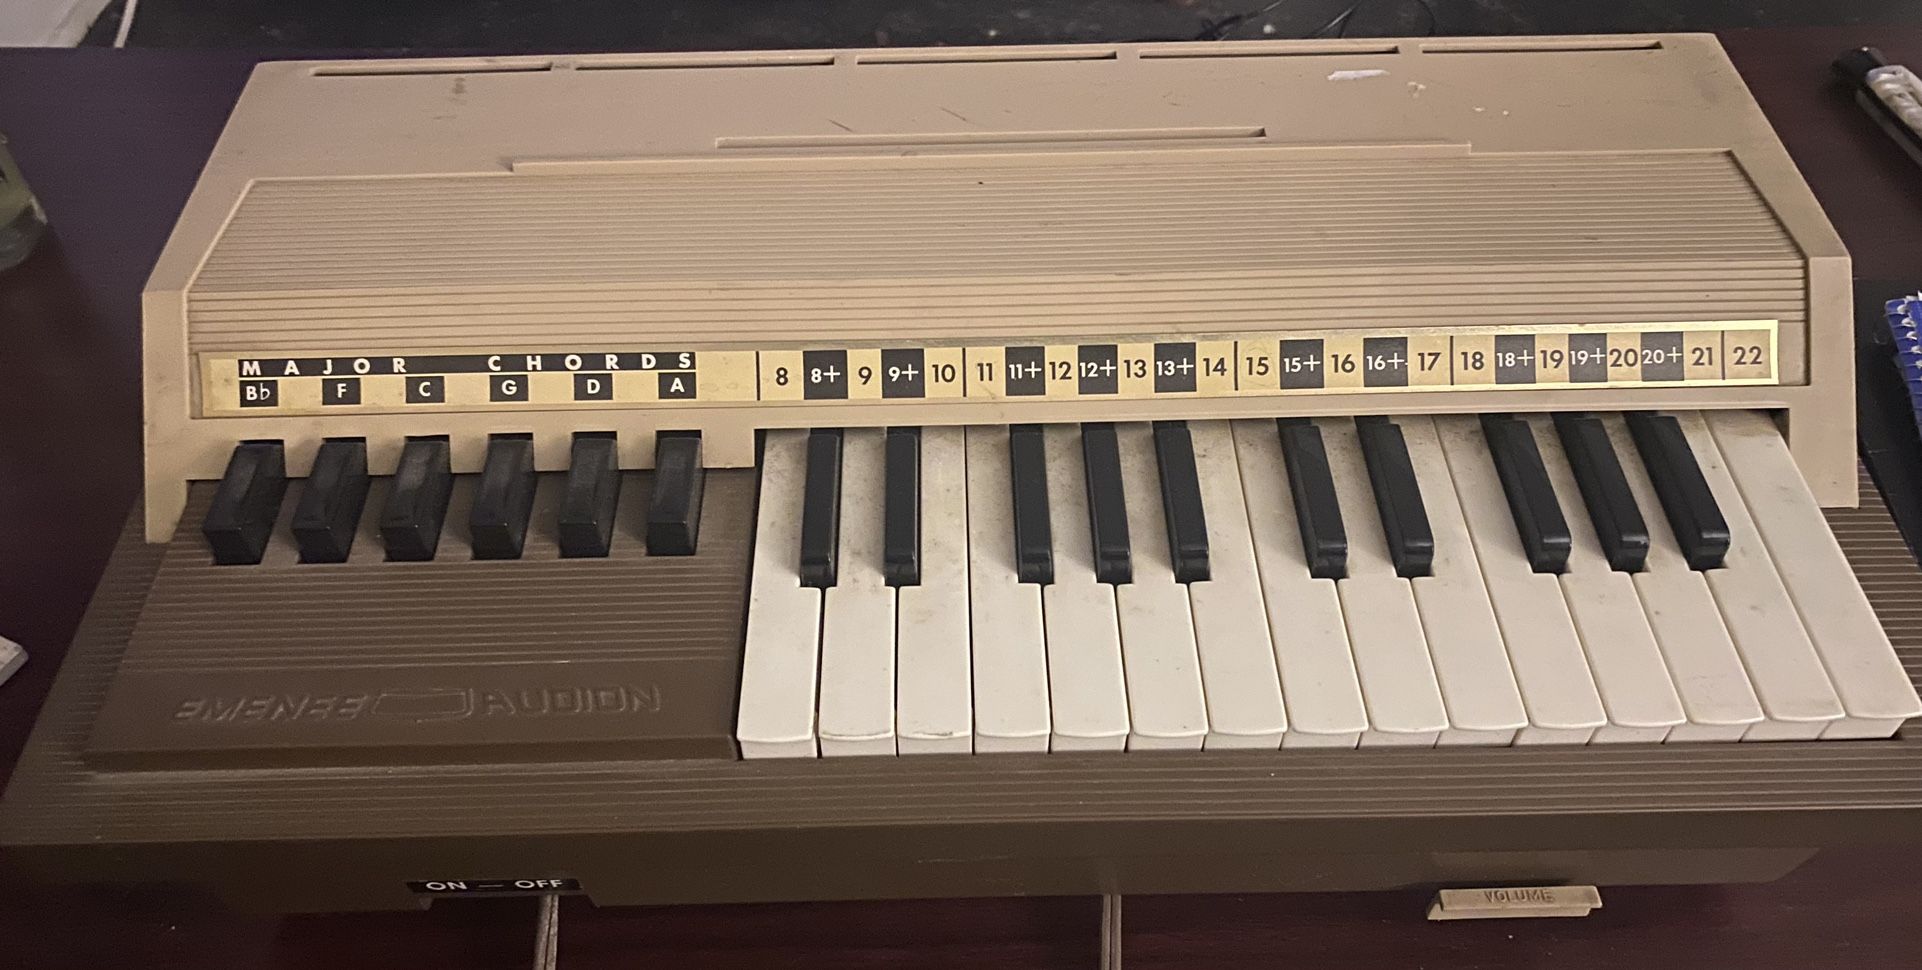 Emenee Audion Portable Organ 